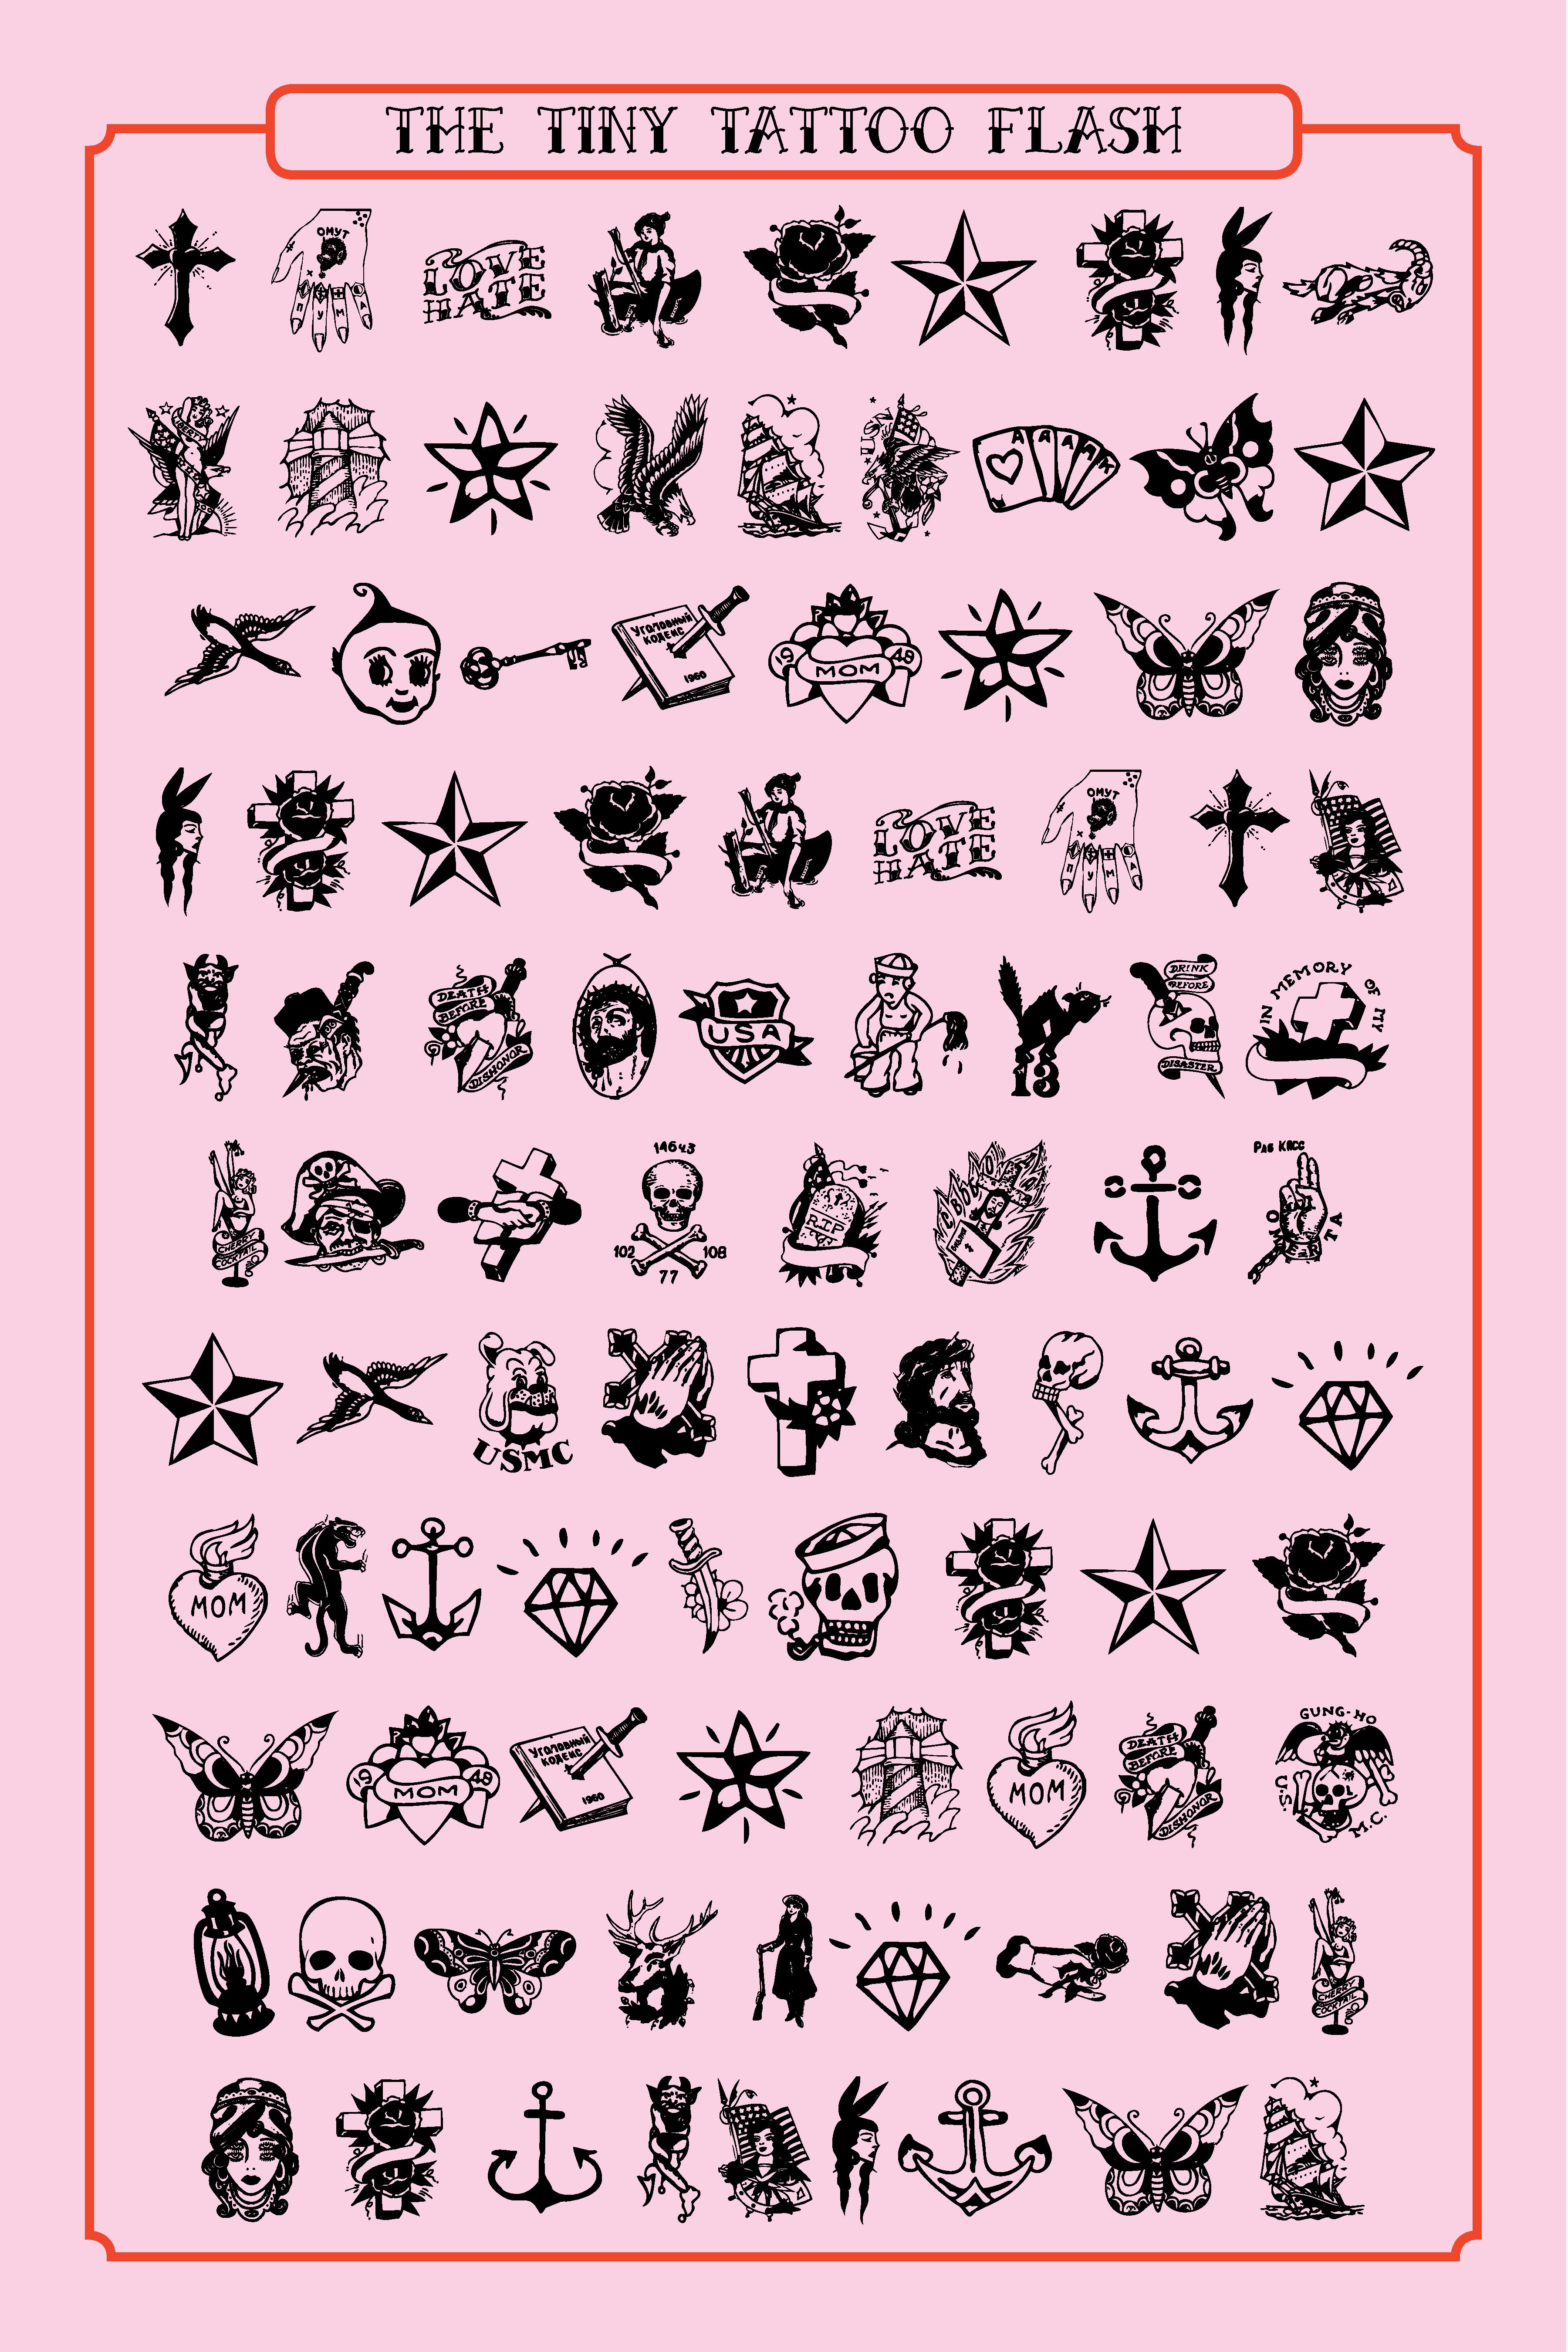 Minimal Flash Tattoo Design Art Book Complete Meaningful Small Tattoo  Designs Art Book  Publishing Diardo Art  9798575941637  Amazoncomau   Books